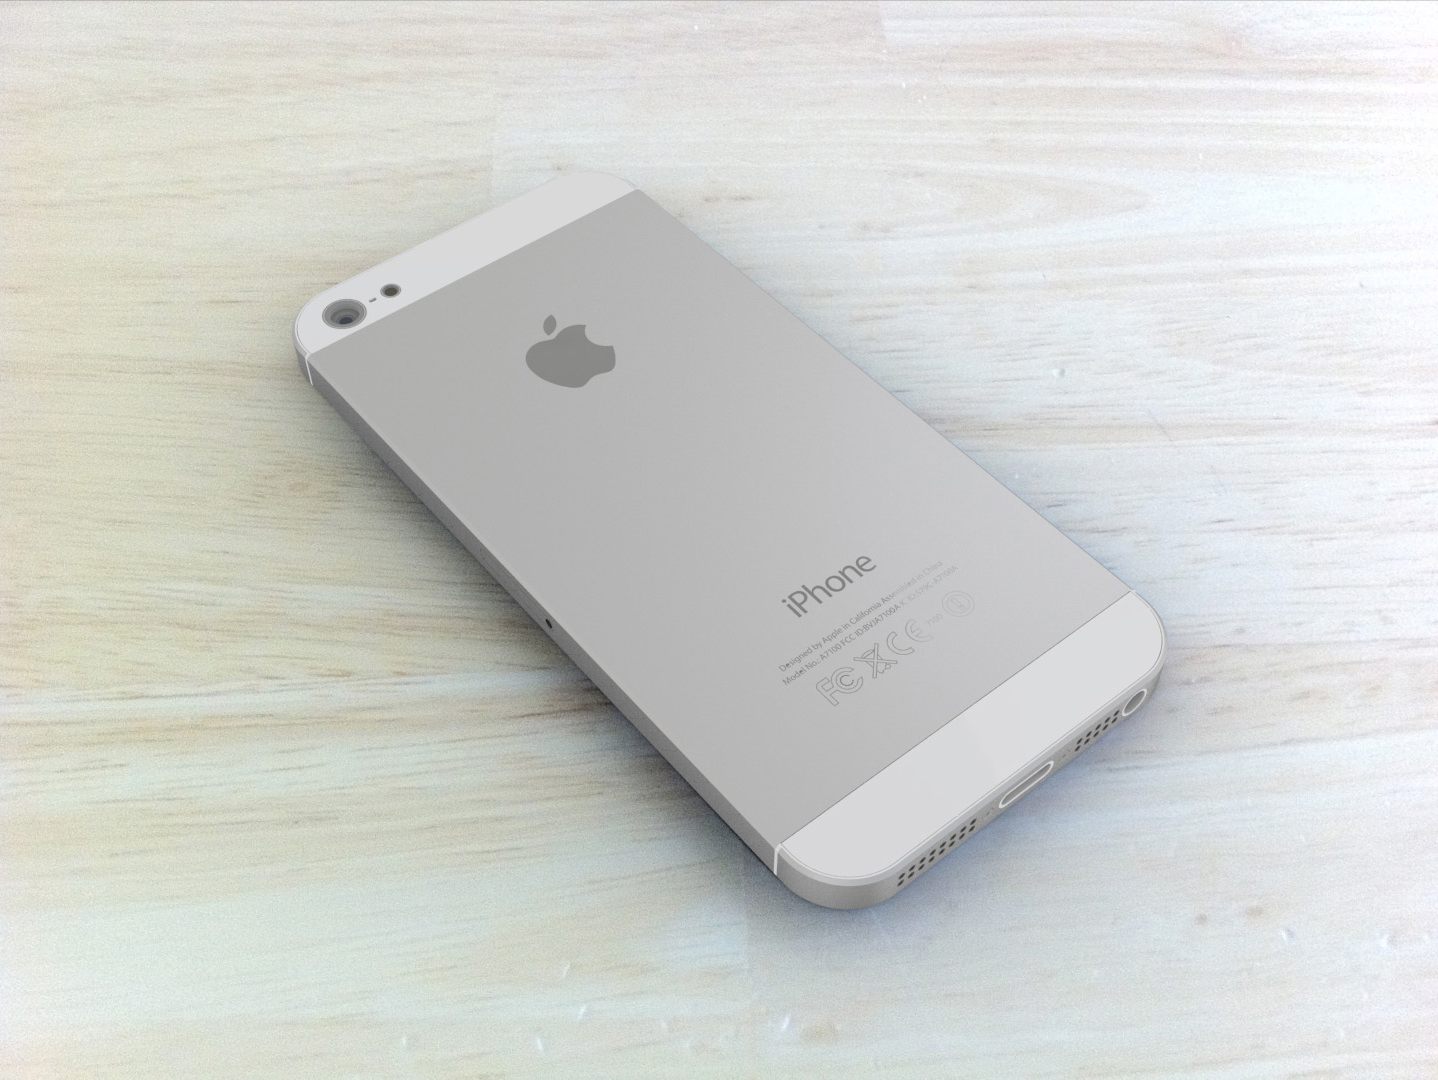 Iphone 5 2. Iphone 5 белый. Айфон 5s серый белый. Фото телефона айфон. Айфон на столе.